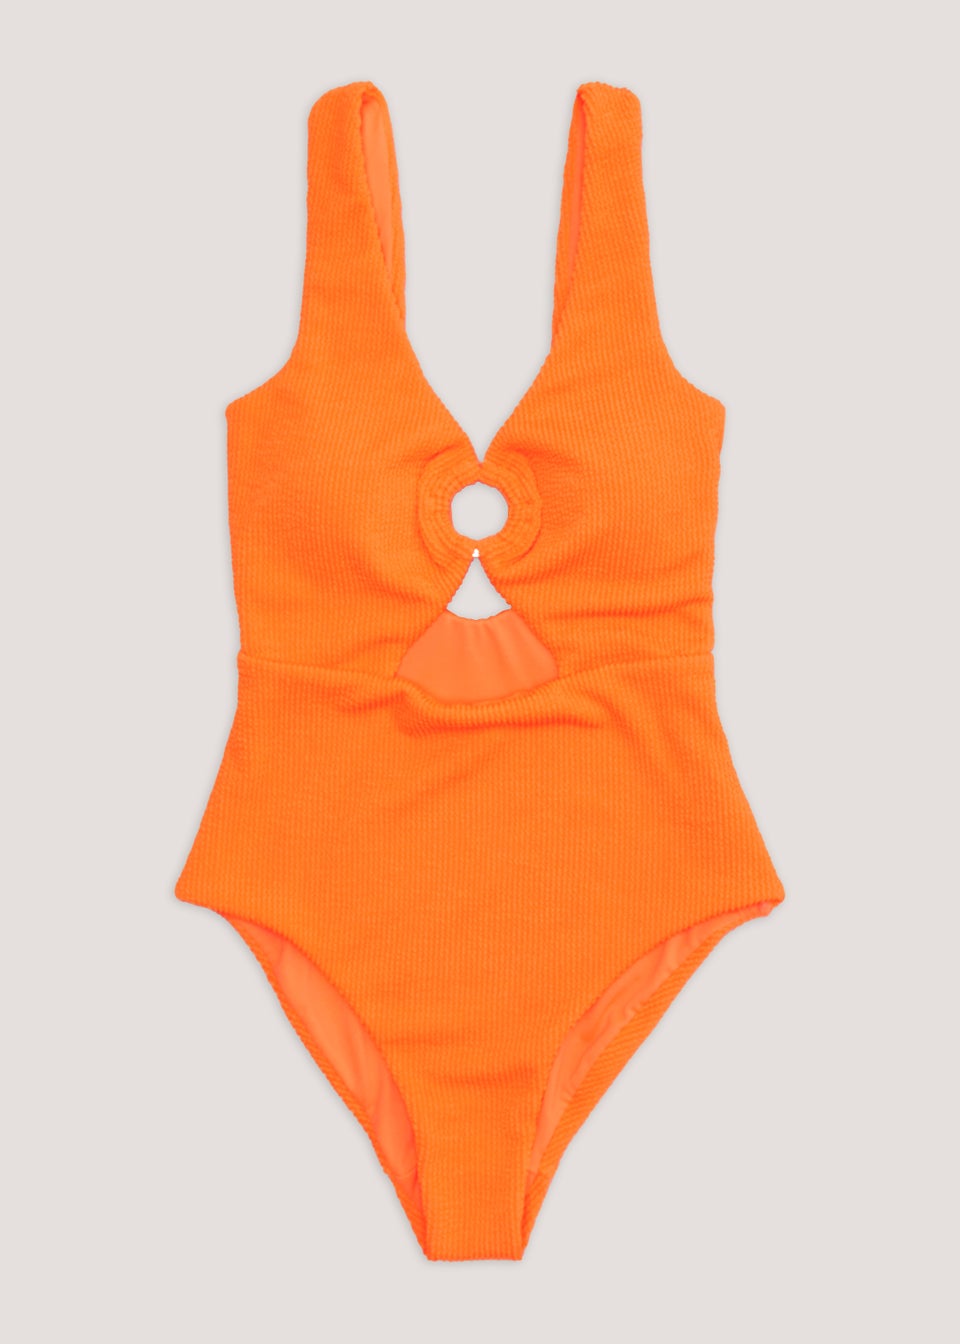 Be Beau Orange Cut Out Swimsuit - Matalan